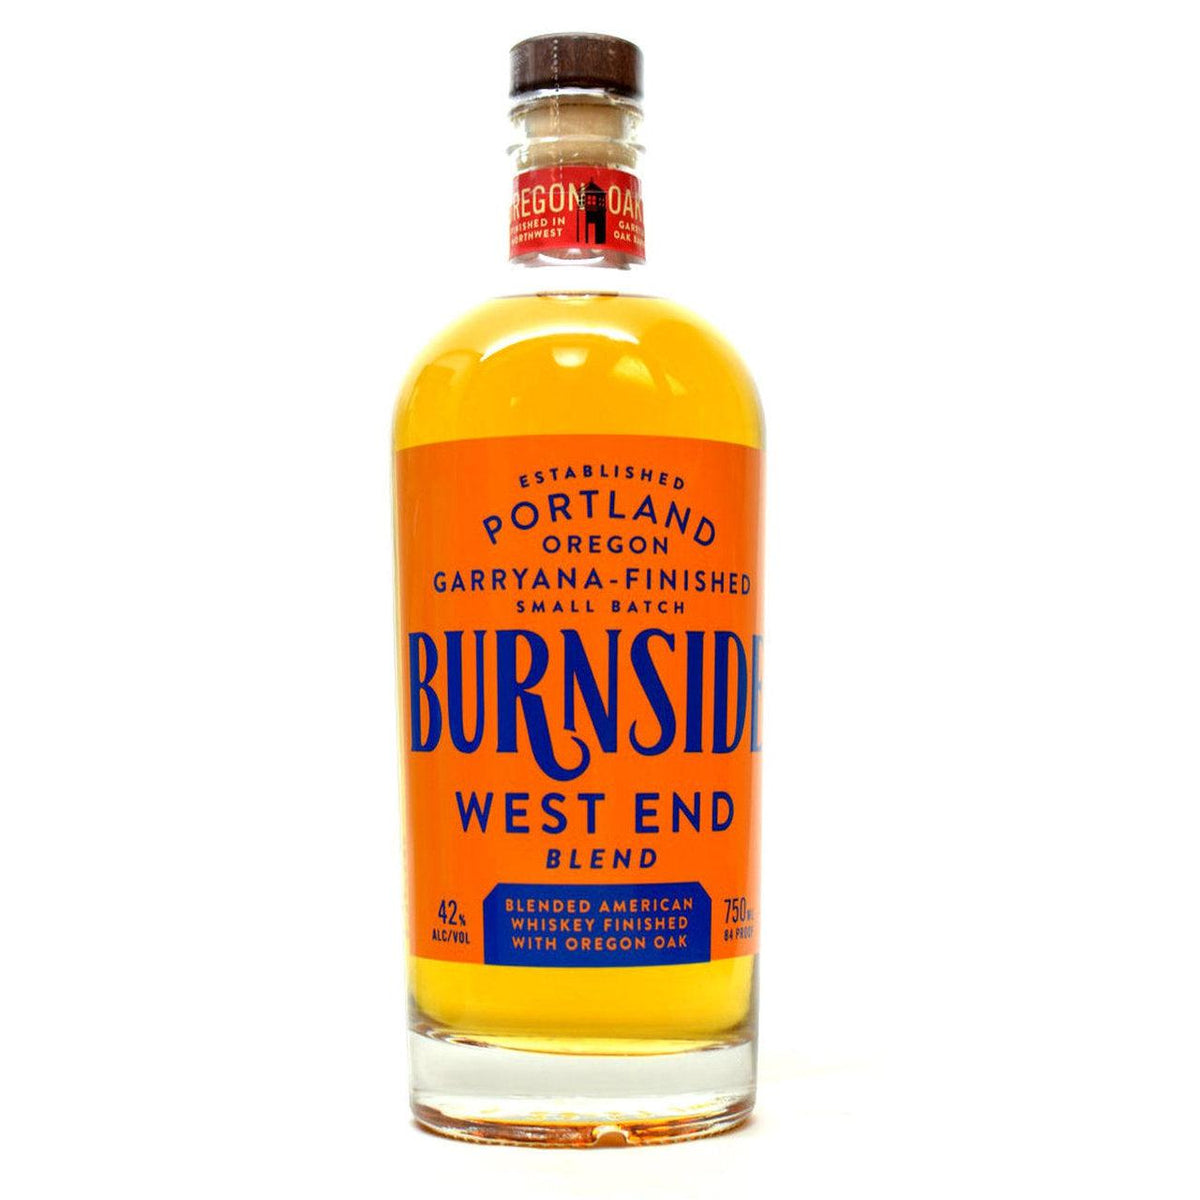 Burnside West End Blend Whiskey